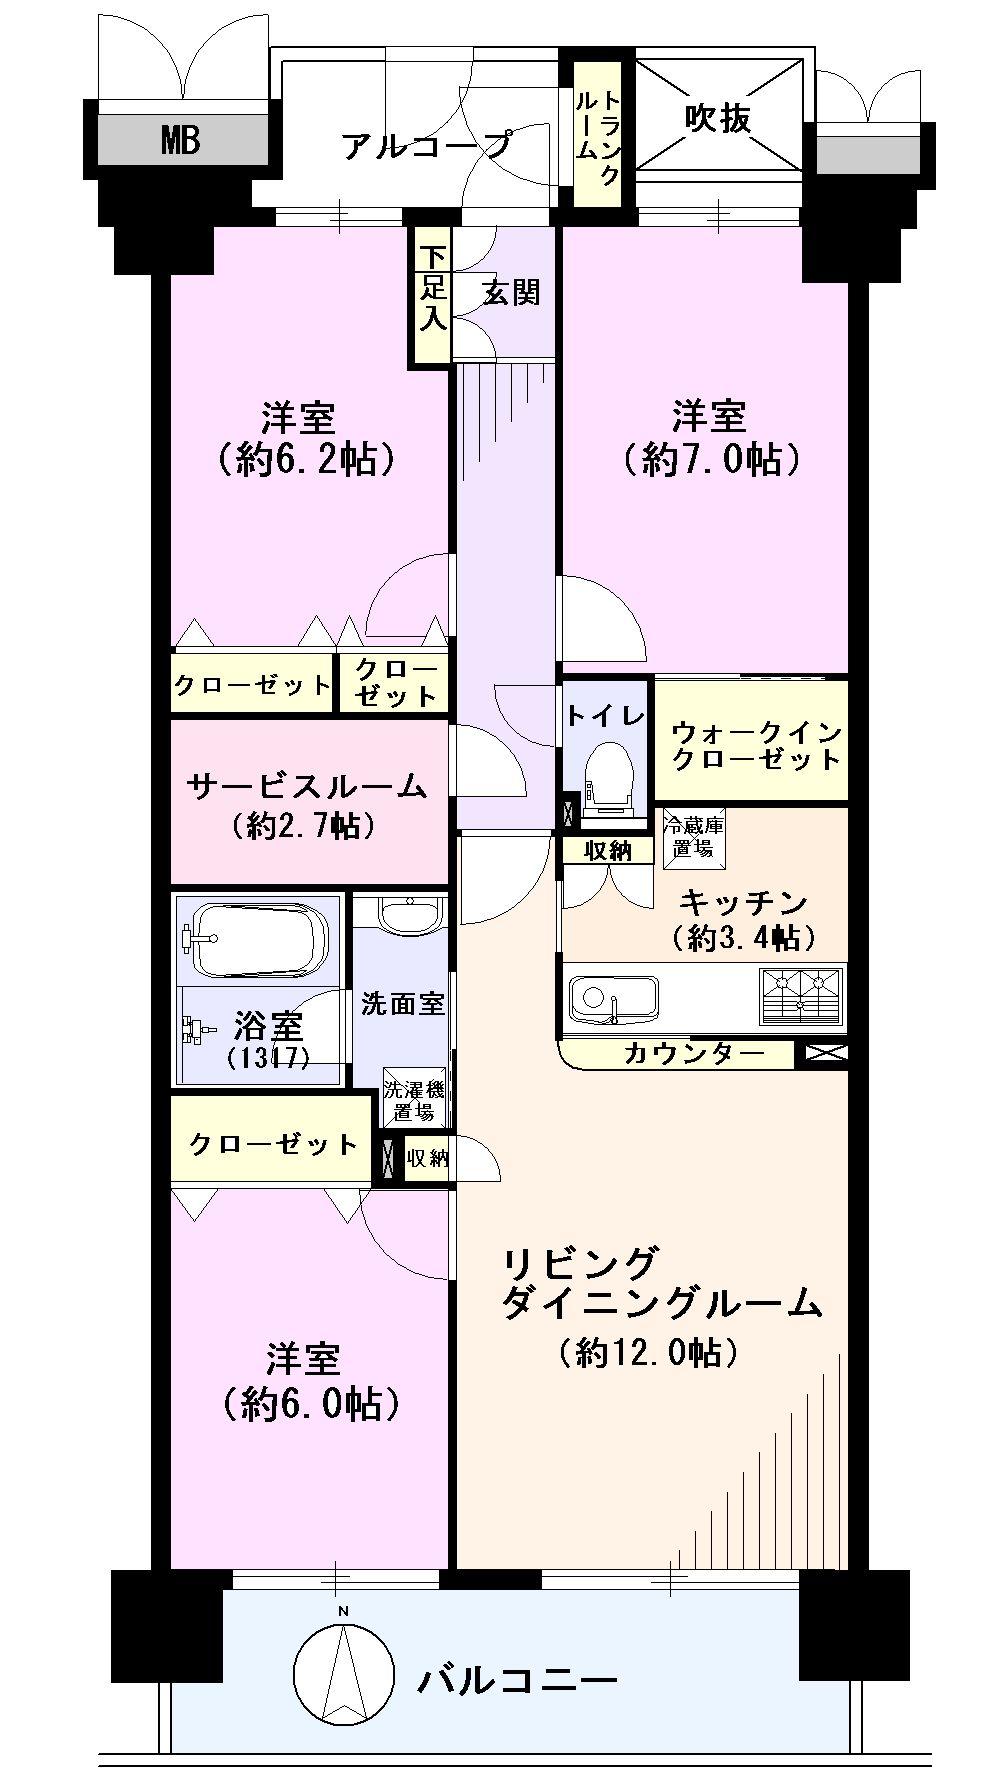 Floor plan. 3LDK + S (storeroom), Price 42,800,000 yen, Occupied area 80.18 sq m , Balcony area 11.34 sq m